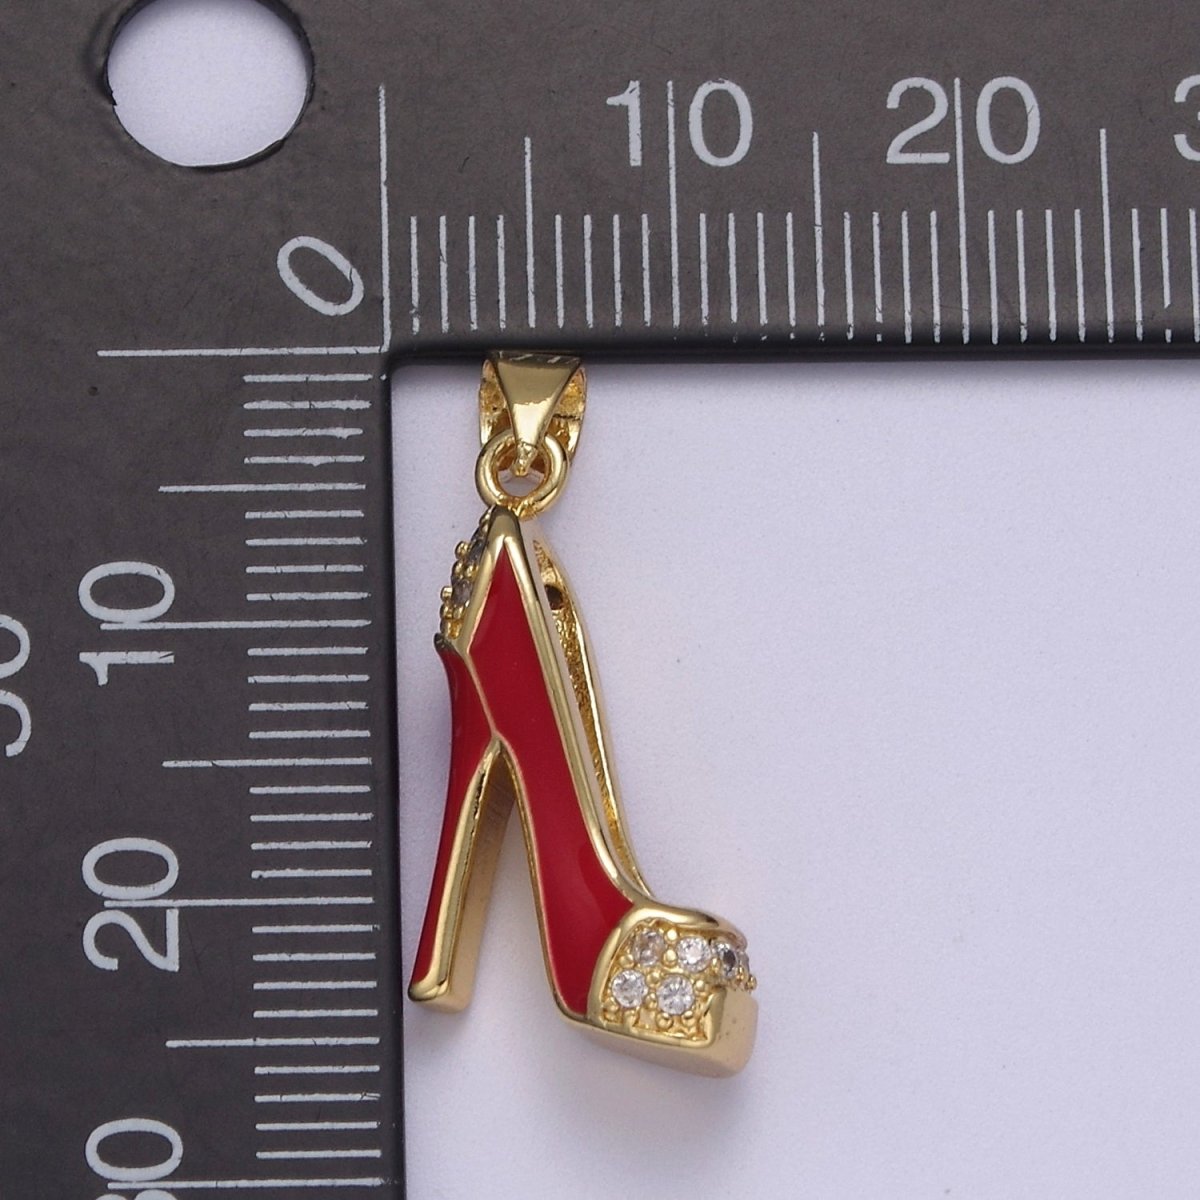 Red high heeled stiletto shoe charm pendant for Bracelet Necklace Earring J-352 - DLUXCA